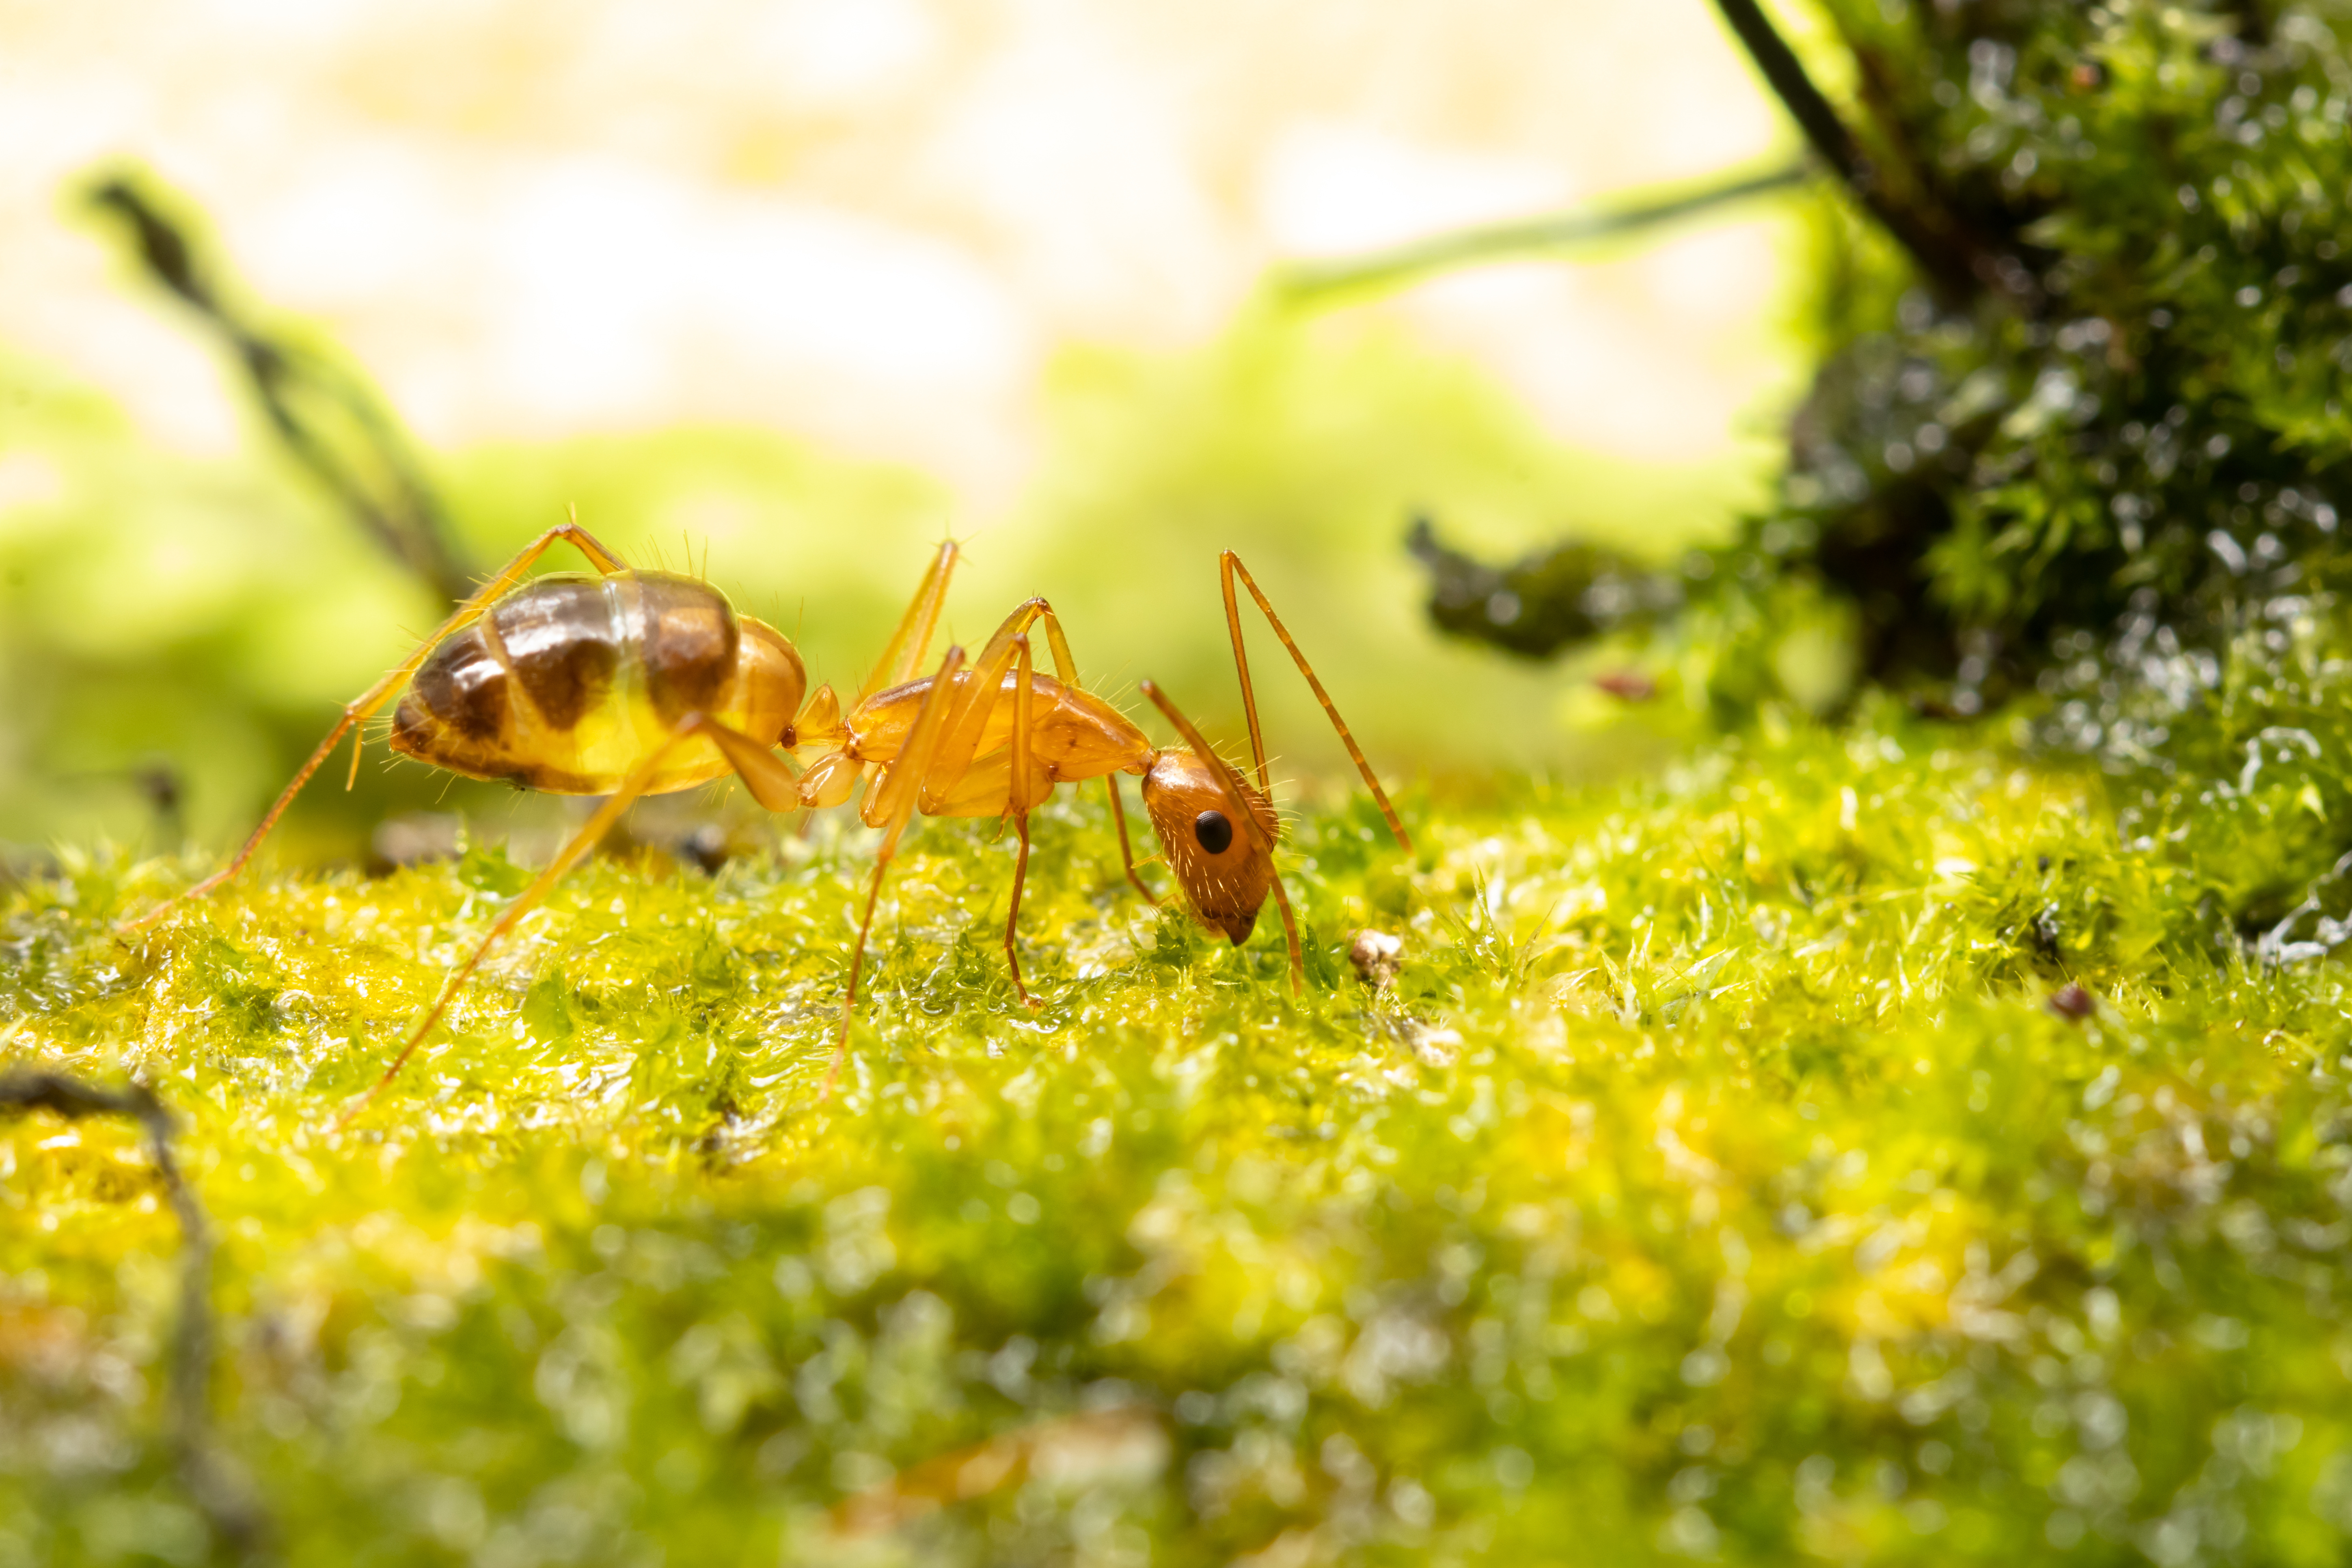 A closeup image of a crazy ant - GGA Pest Management offers extermination services for crazy ants.